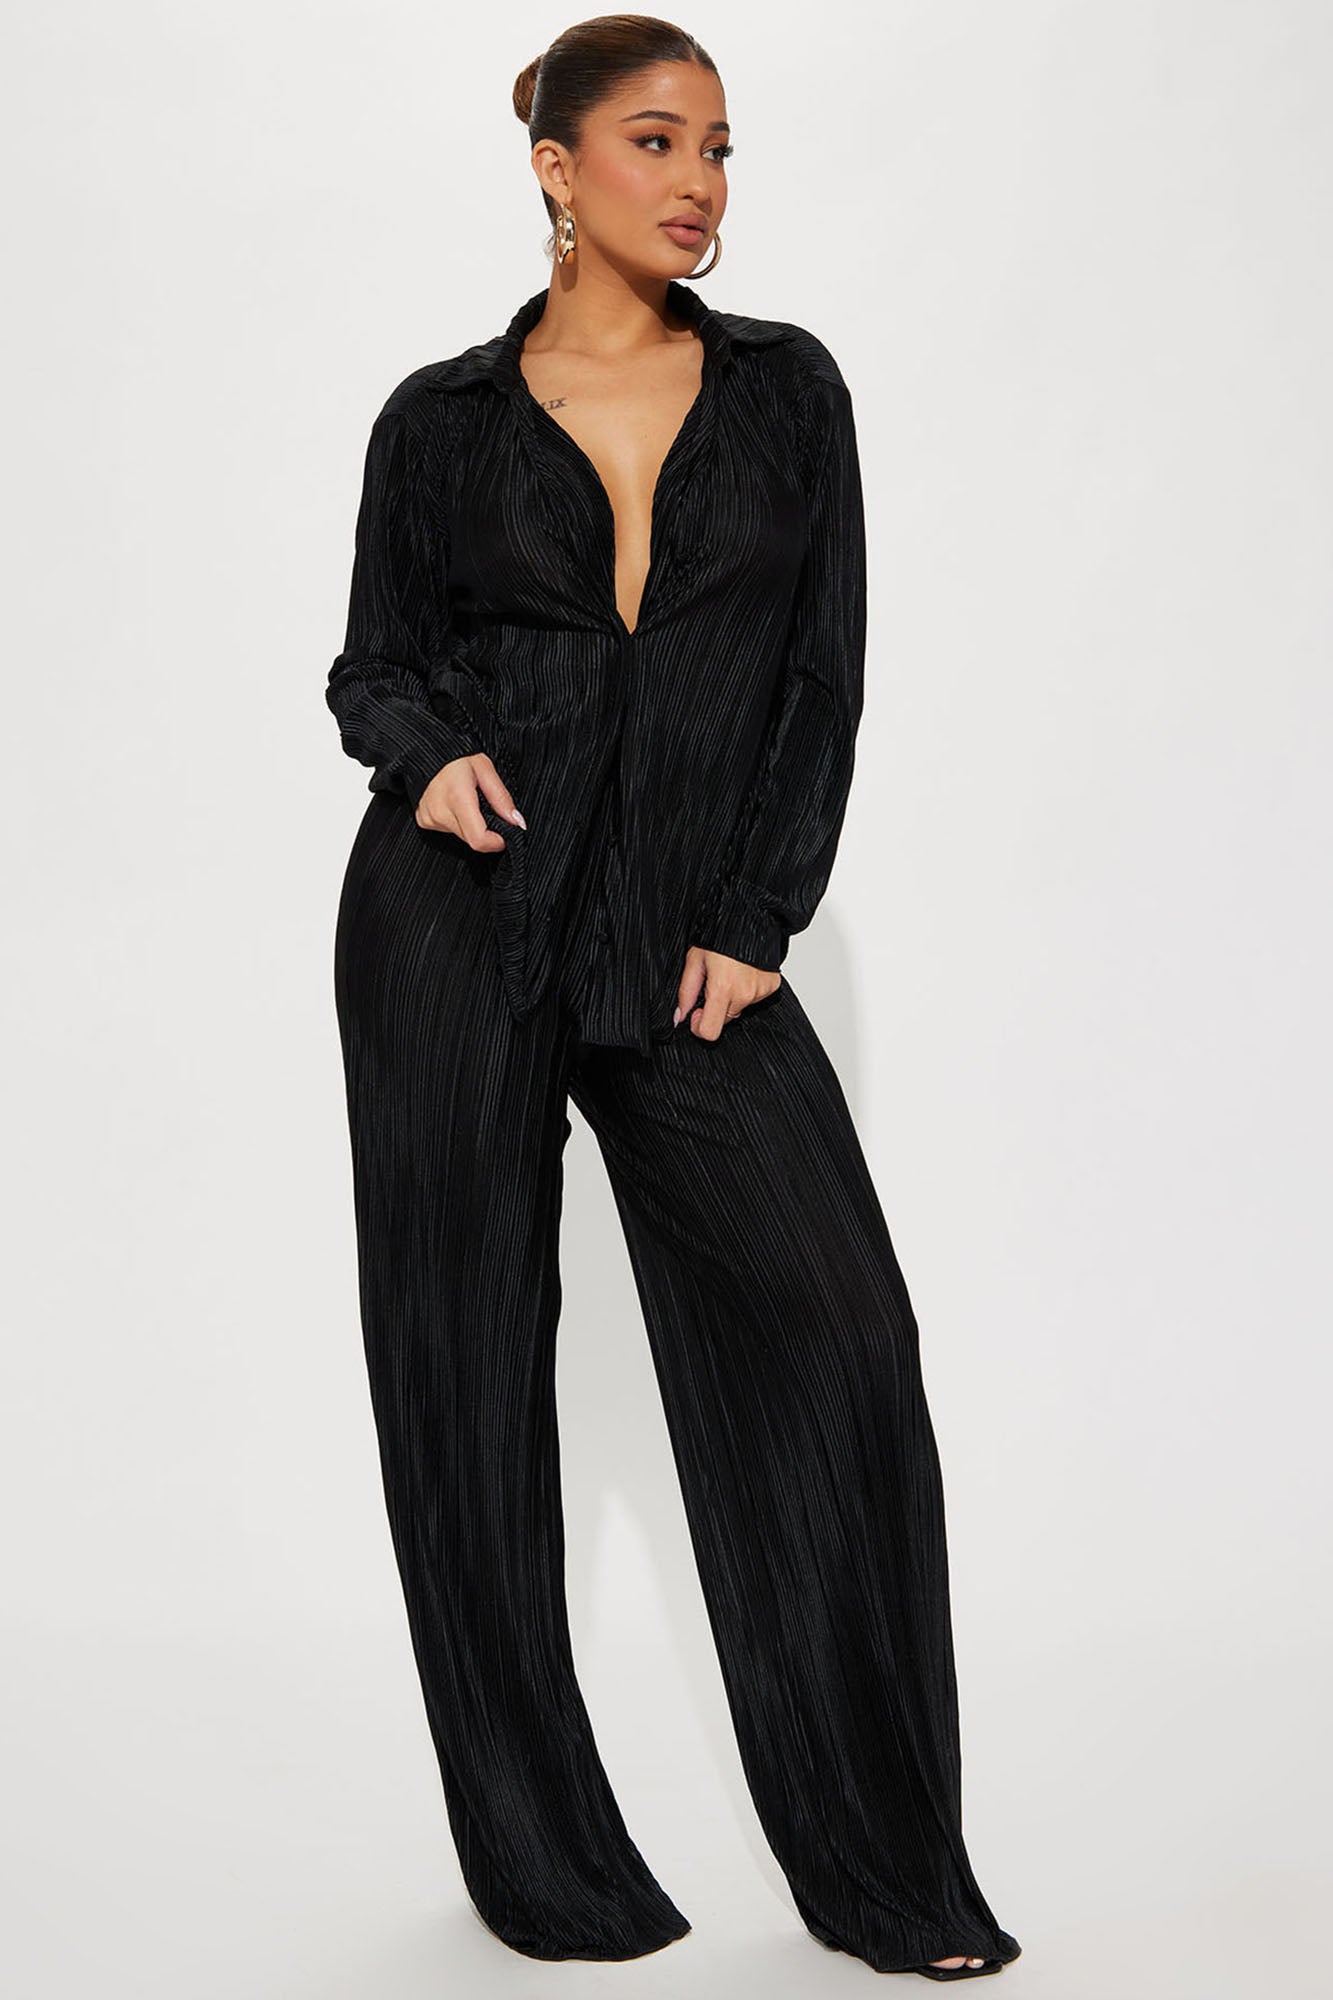 If It Plisse You Pant Set - Black, Fashion Nova, Matching Sets